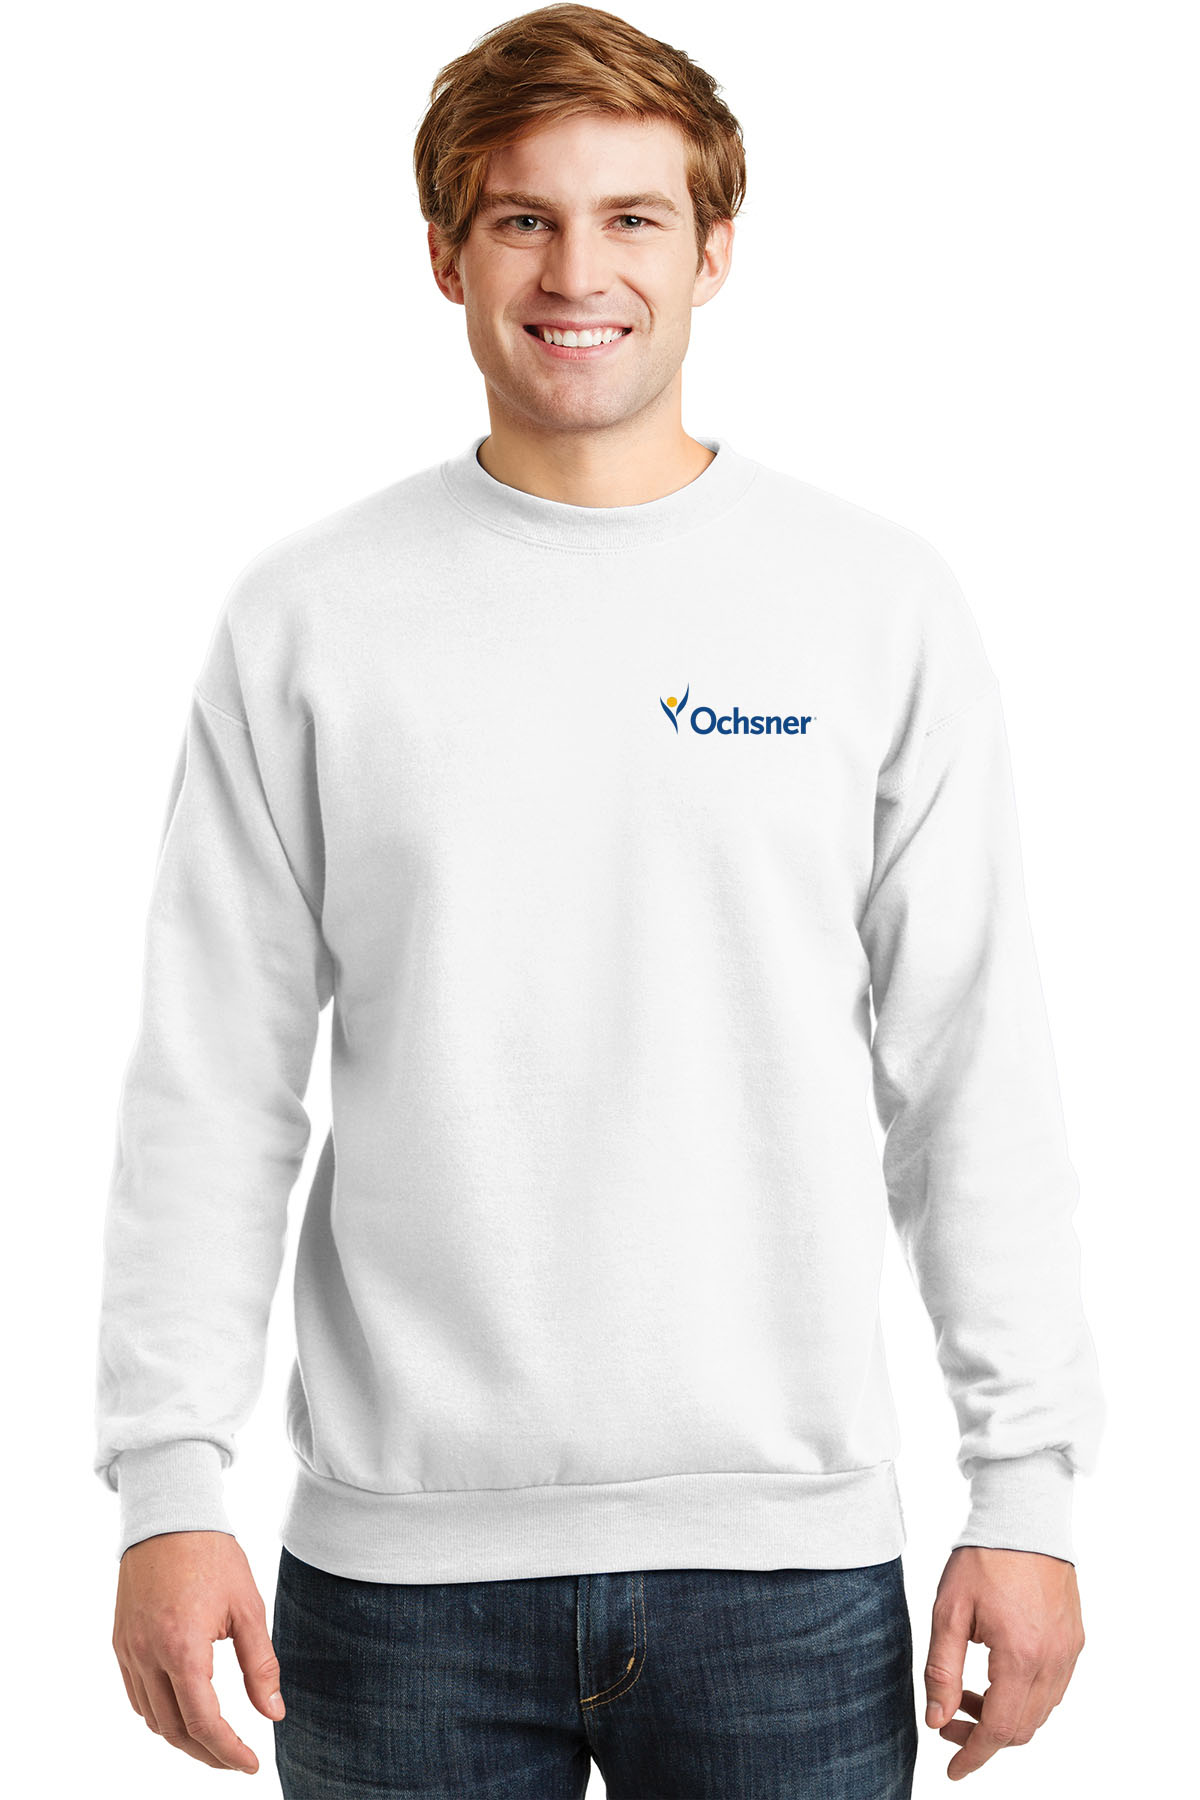 Hanes Unisex Ecosmart Sweatshirt, , large image number 4